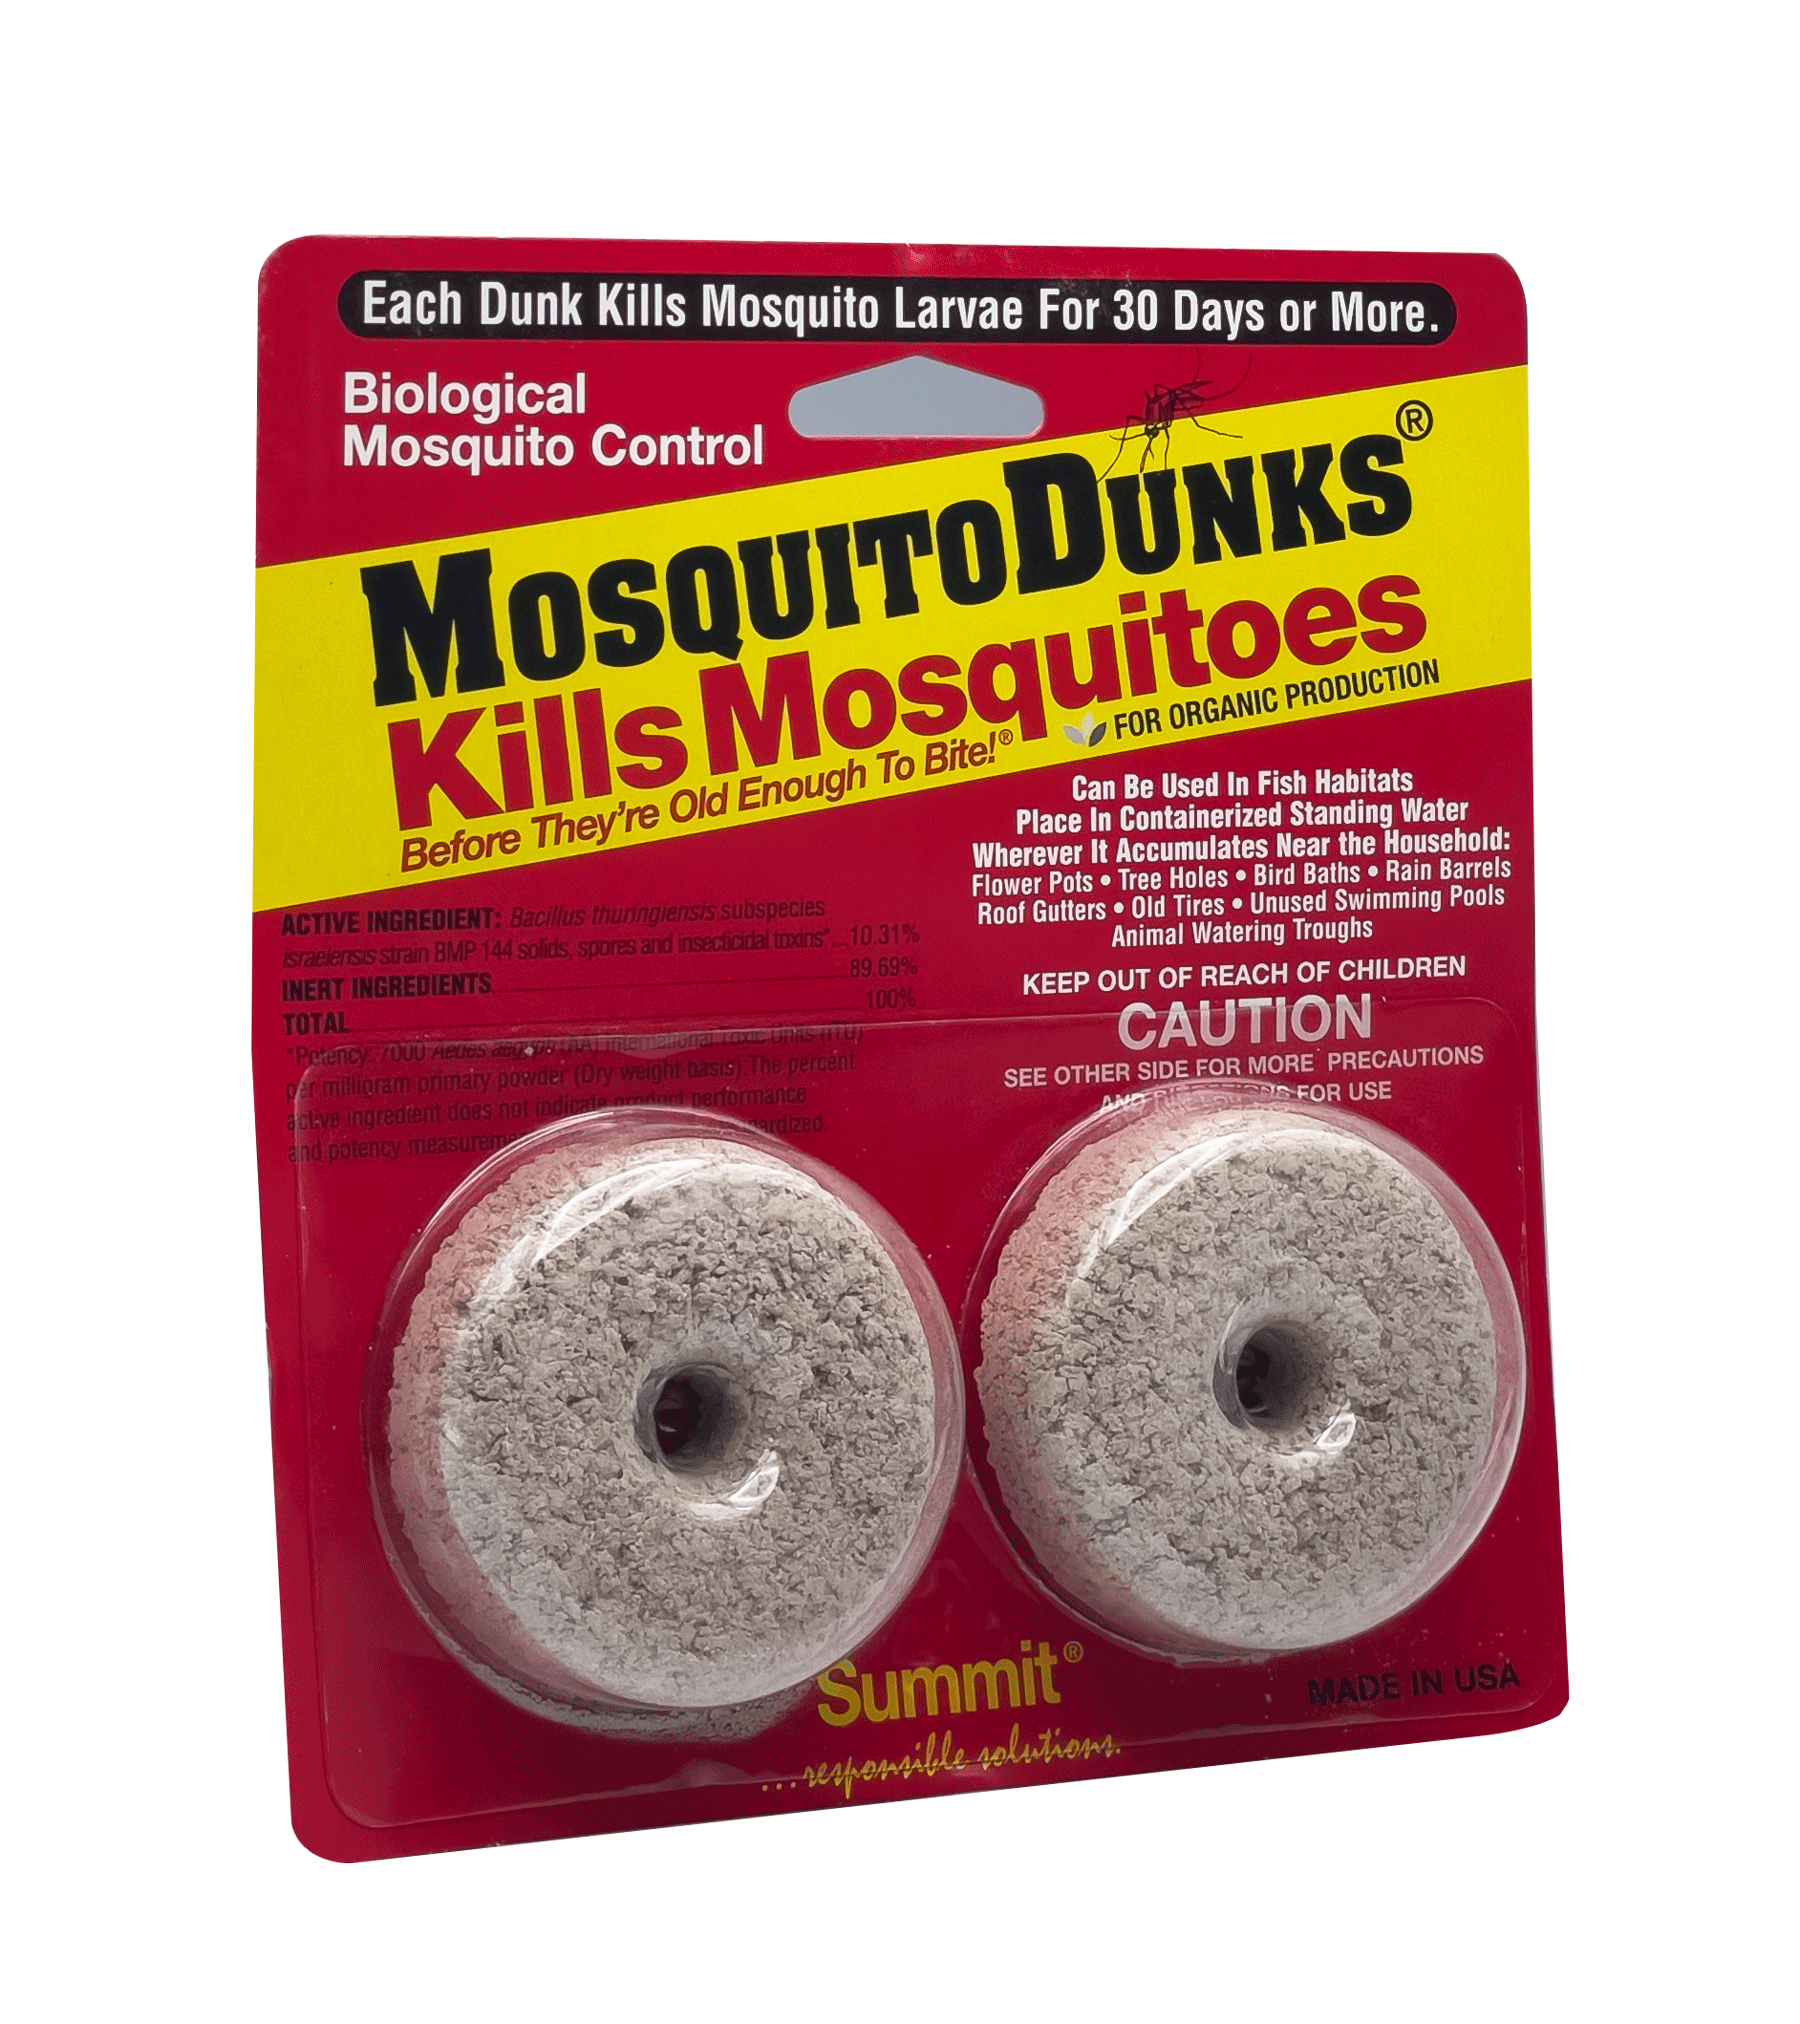 Summit® Quick Kill Mosquito + Fungus Gnat Control